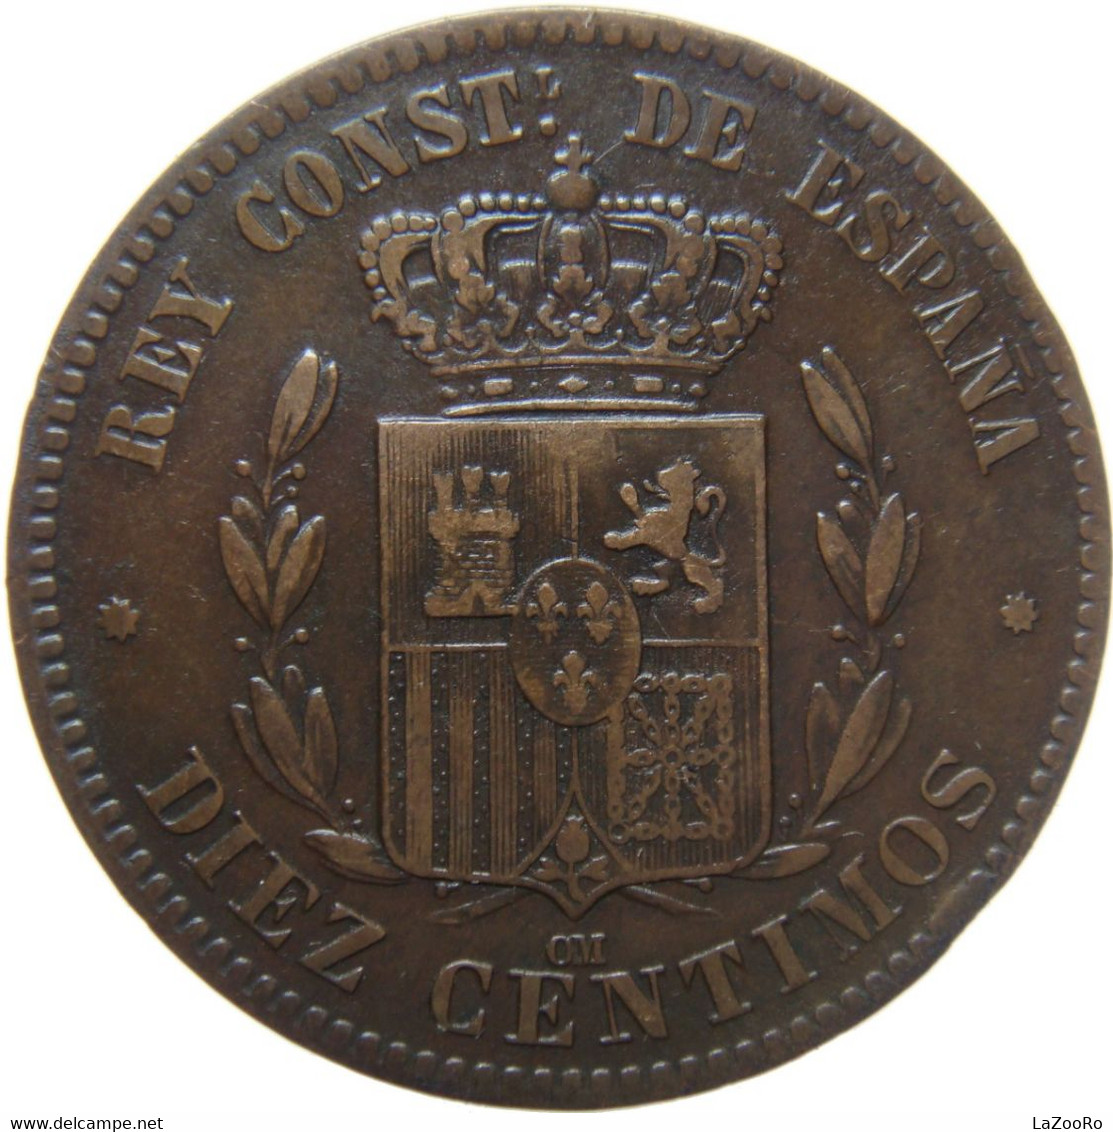 LaZooRo: Spain 10 Centimos 1877 VF / XF - First Minting